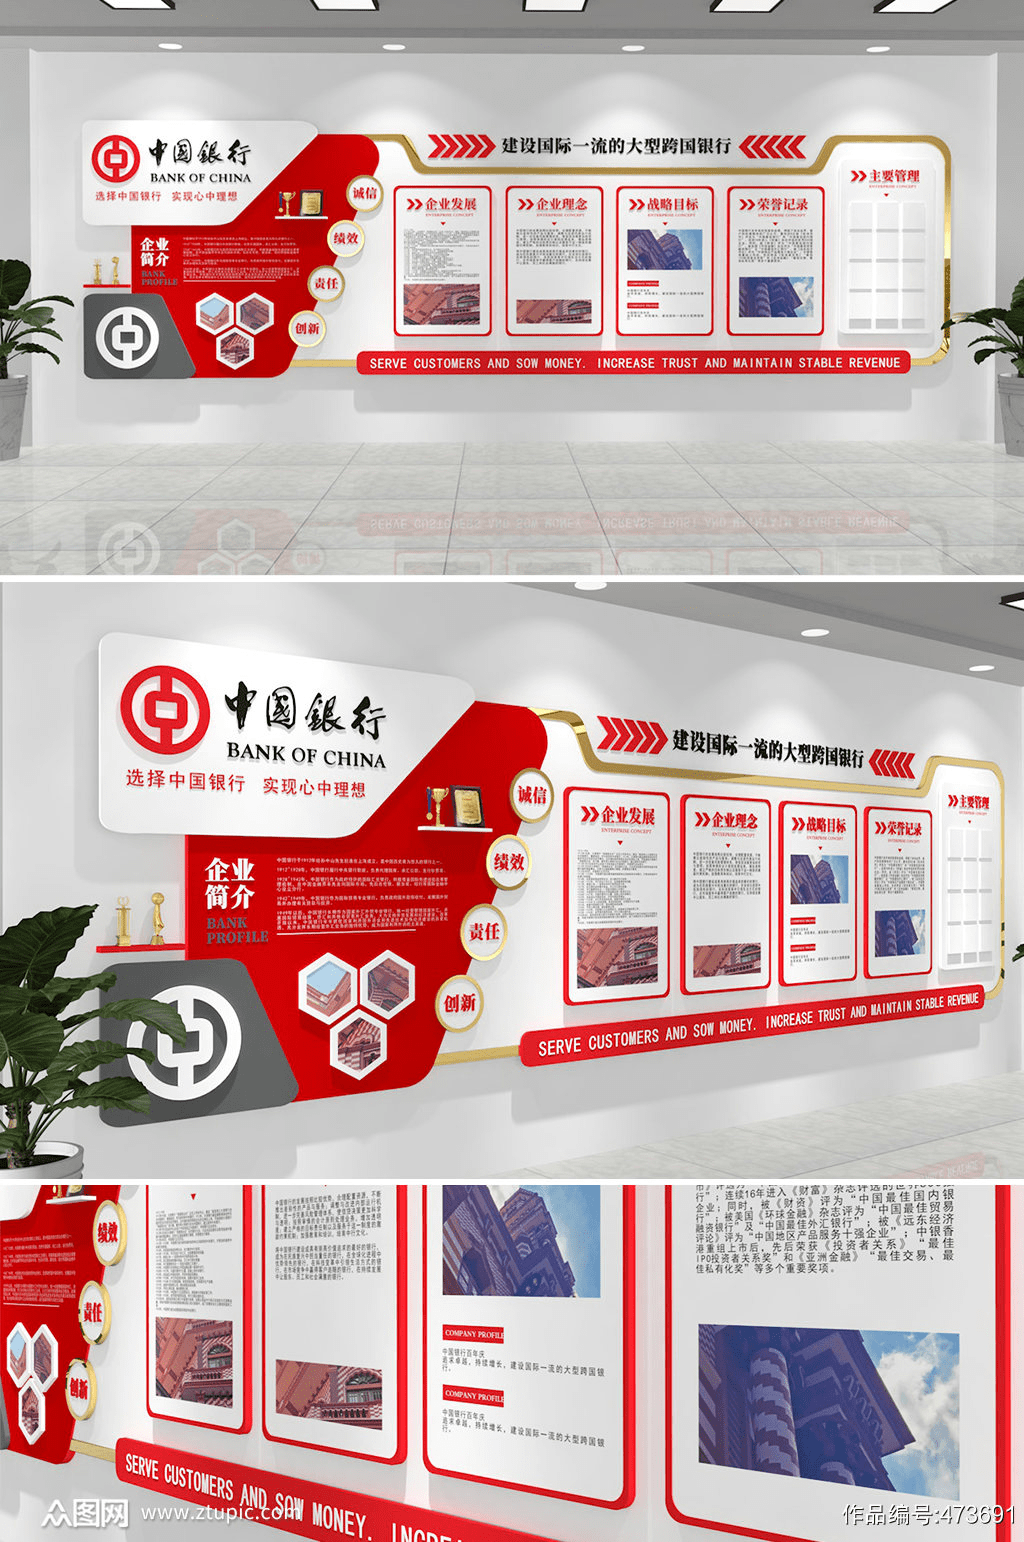 【leyu乐鱼官网】
2021最新银行文化墙创意设计图片浏览